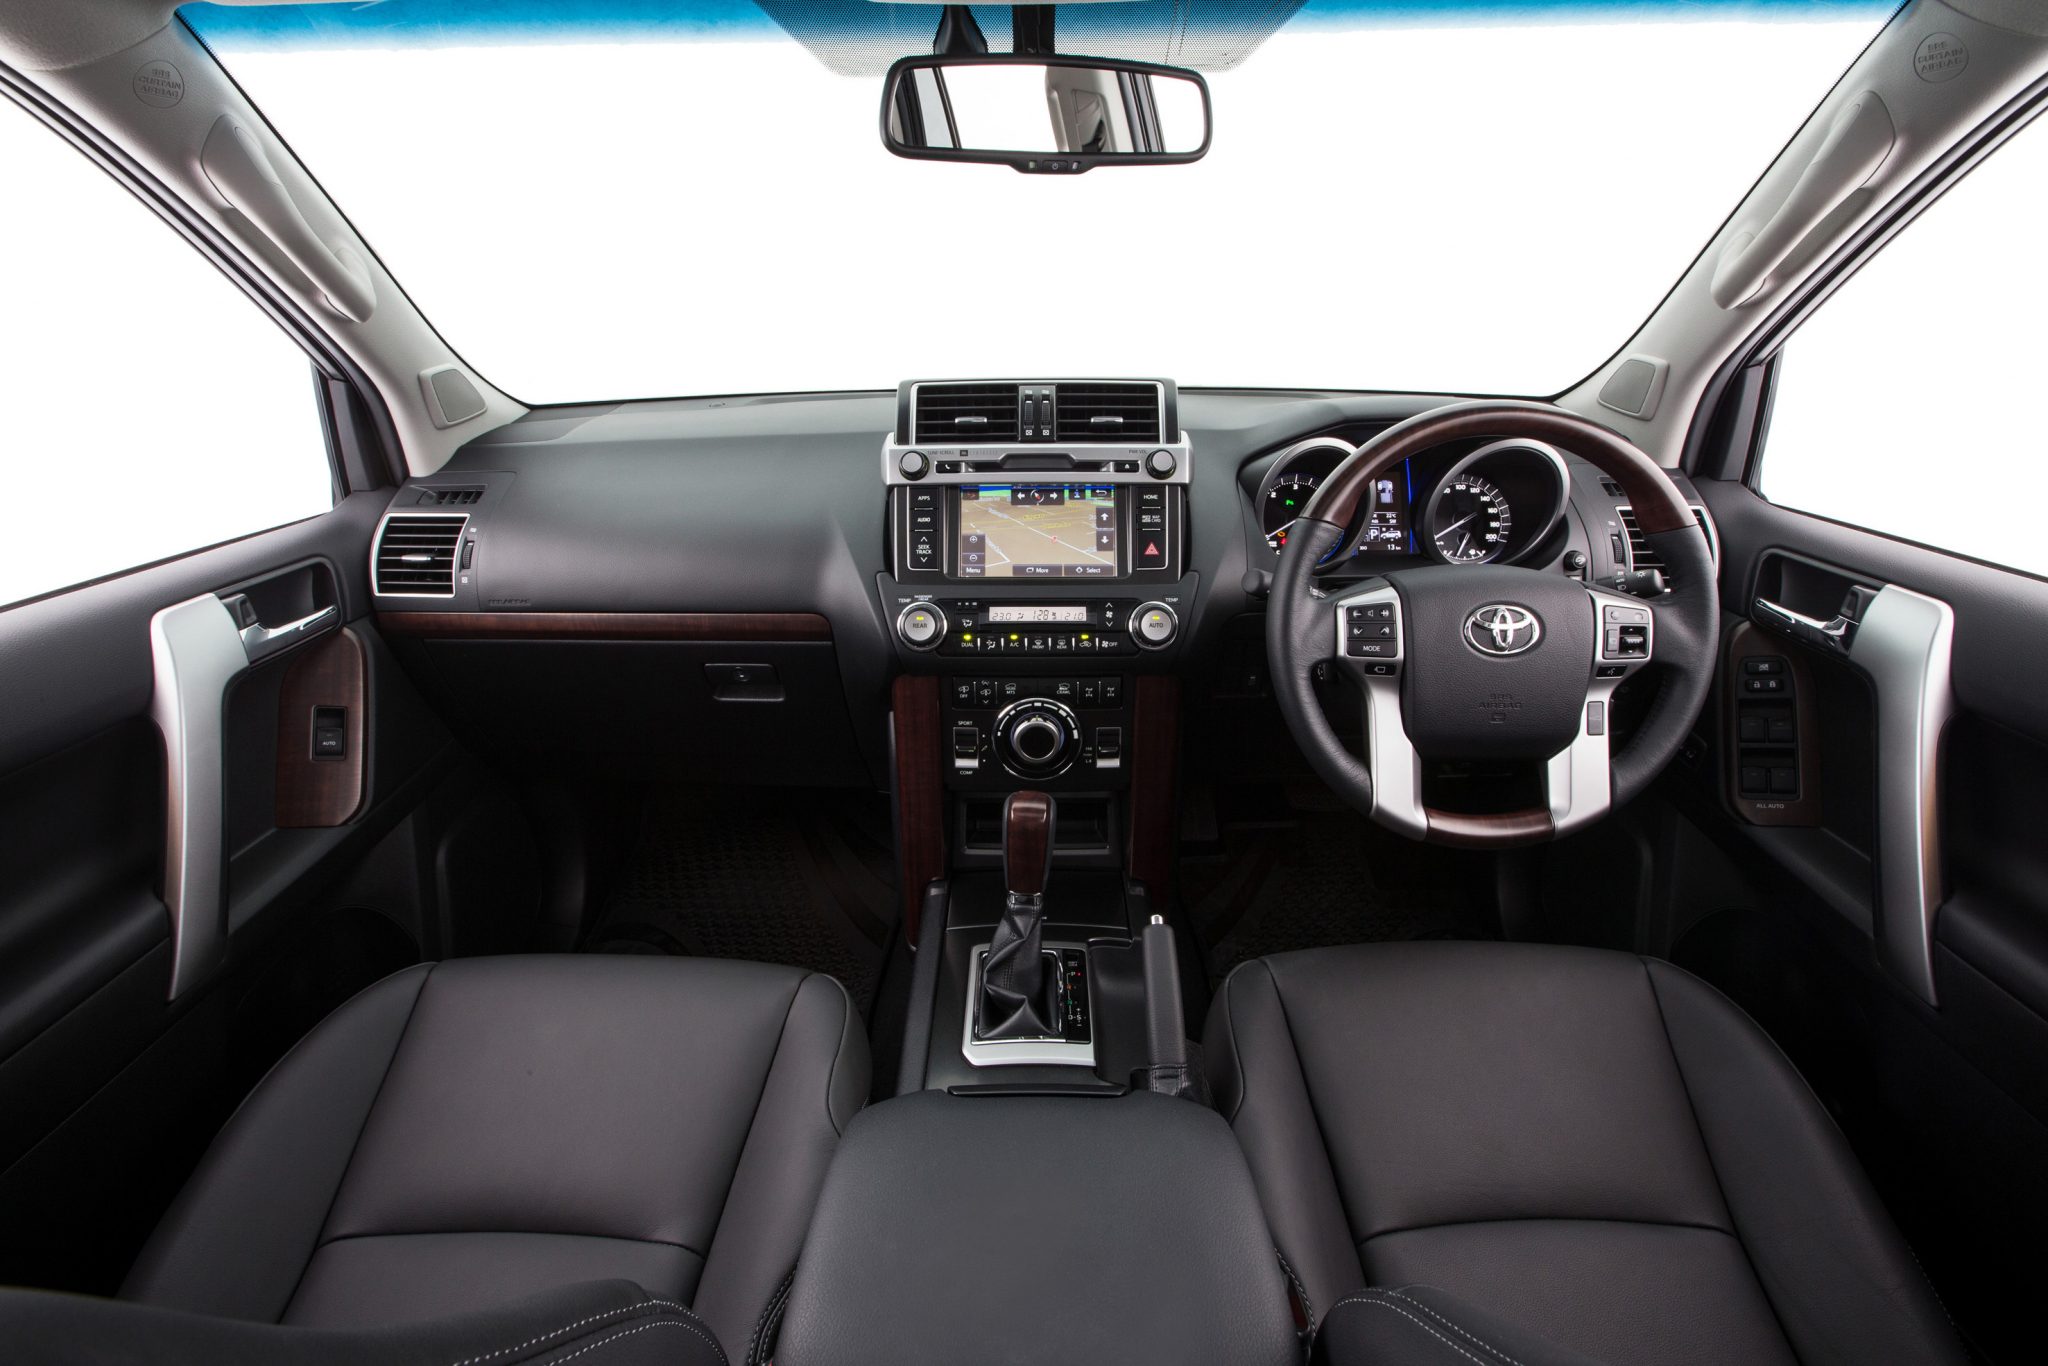 Toyota Cars - News: 2014 LandCruiser Prado updated